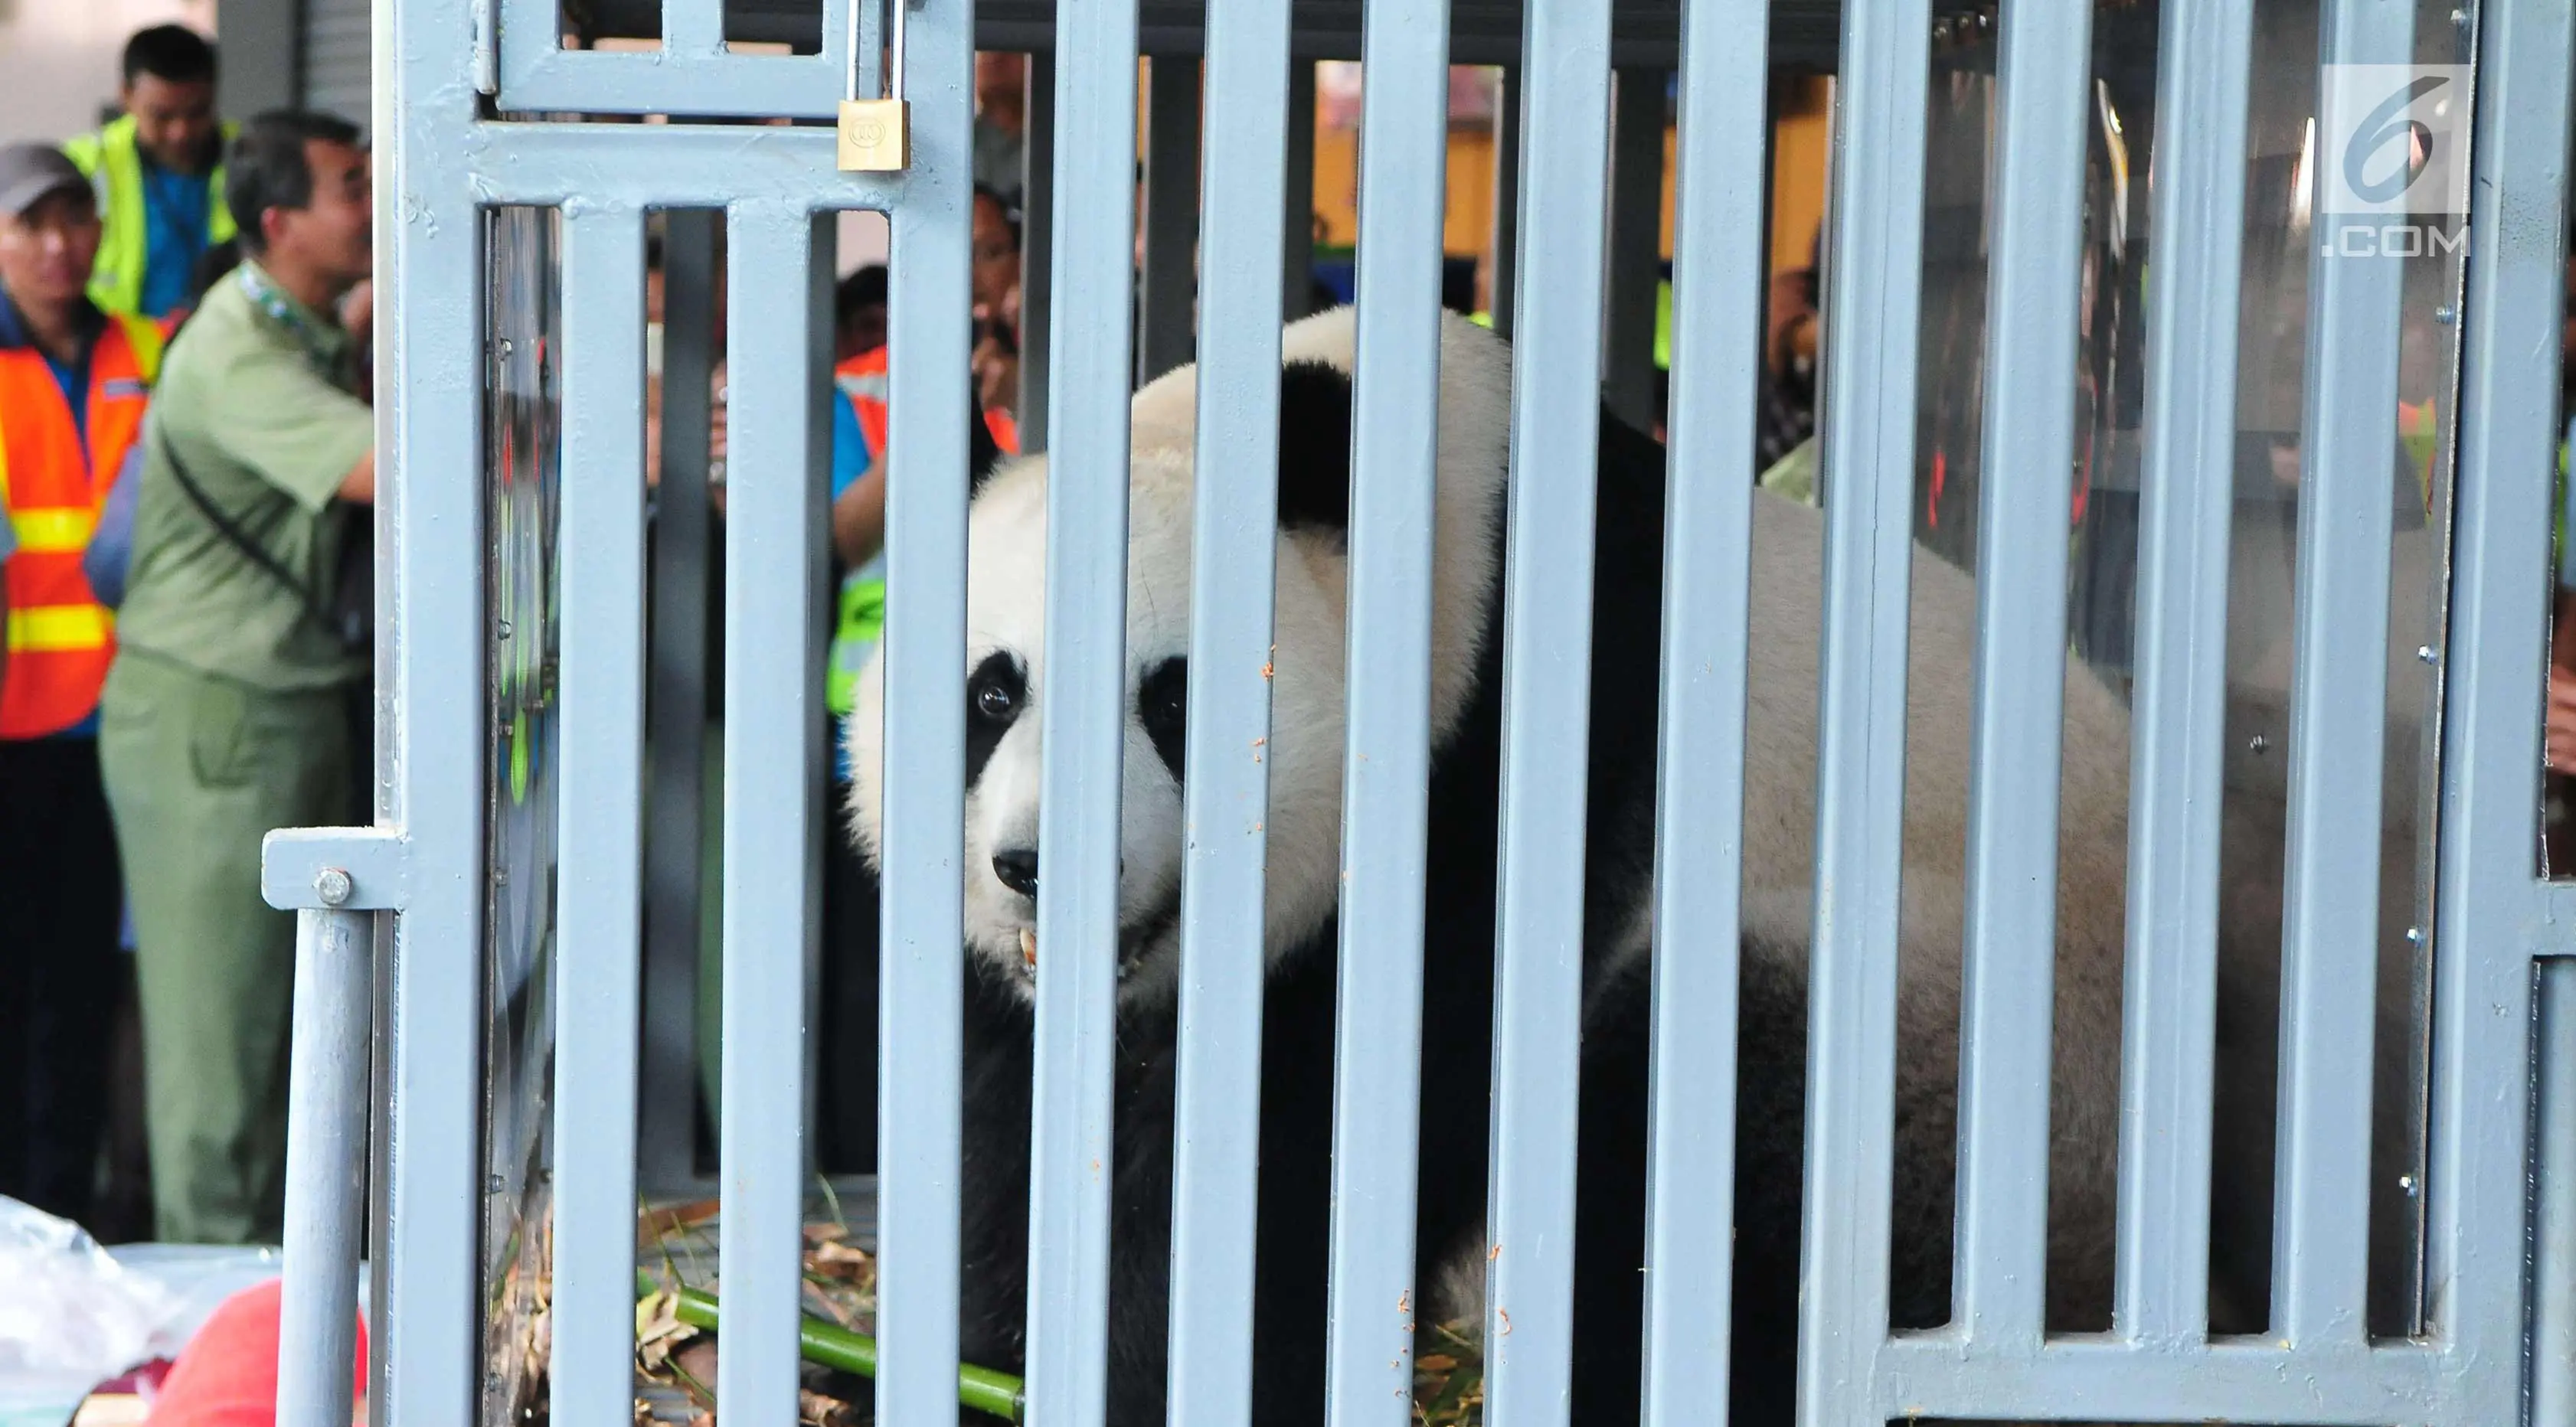 Seekor panda China berada di dalam kandang saat tiba di Bandara Soekarno-Hatta, Tangerang, Kamis (28/9). Kehadiran dua panda ini dimaknai sebagai simbol persahabatan, perdamaian, dan pengetahuan antara Indonesia dengan China. (/Helmi Afandi)